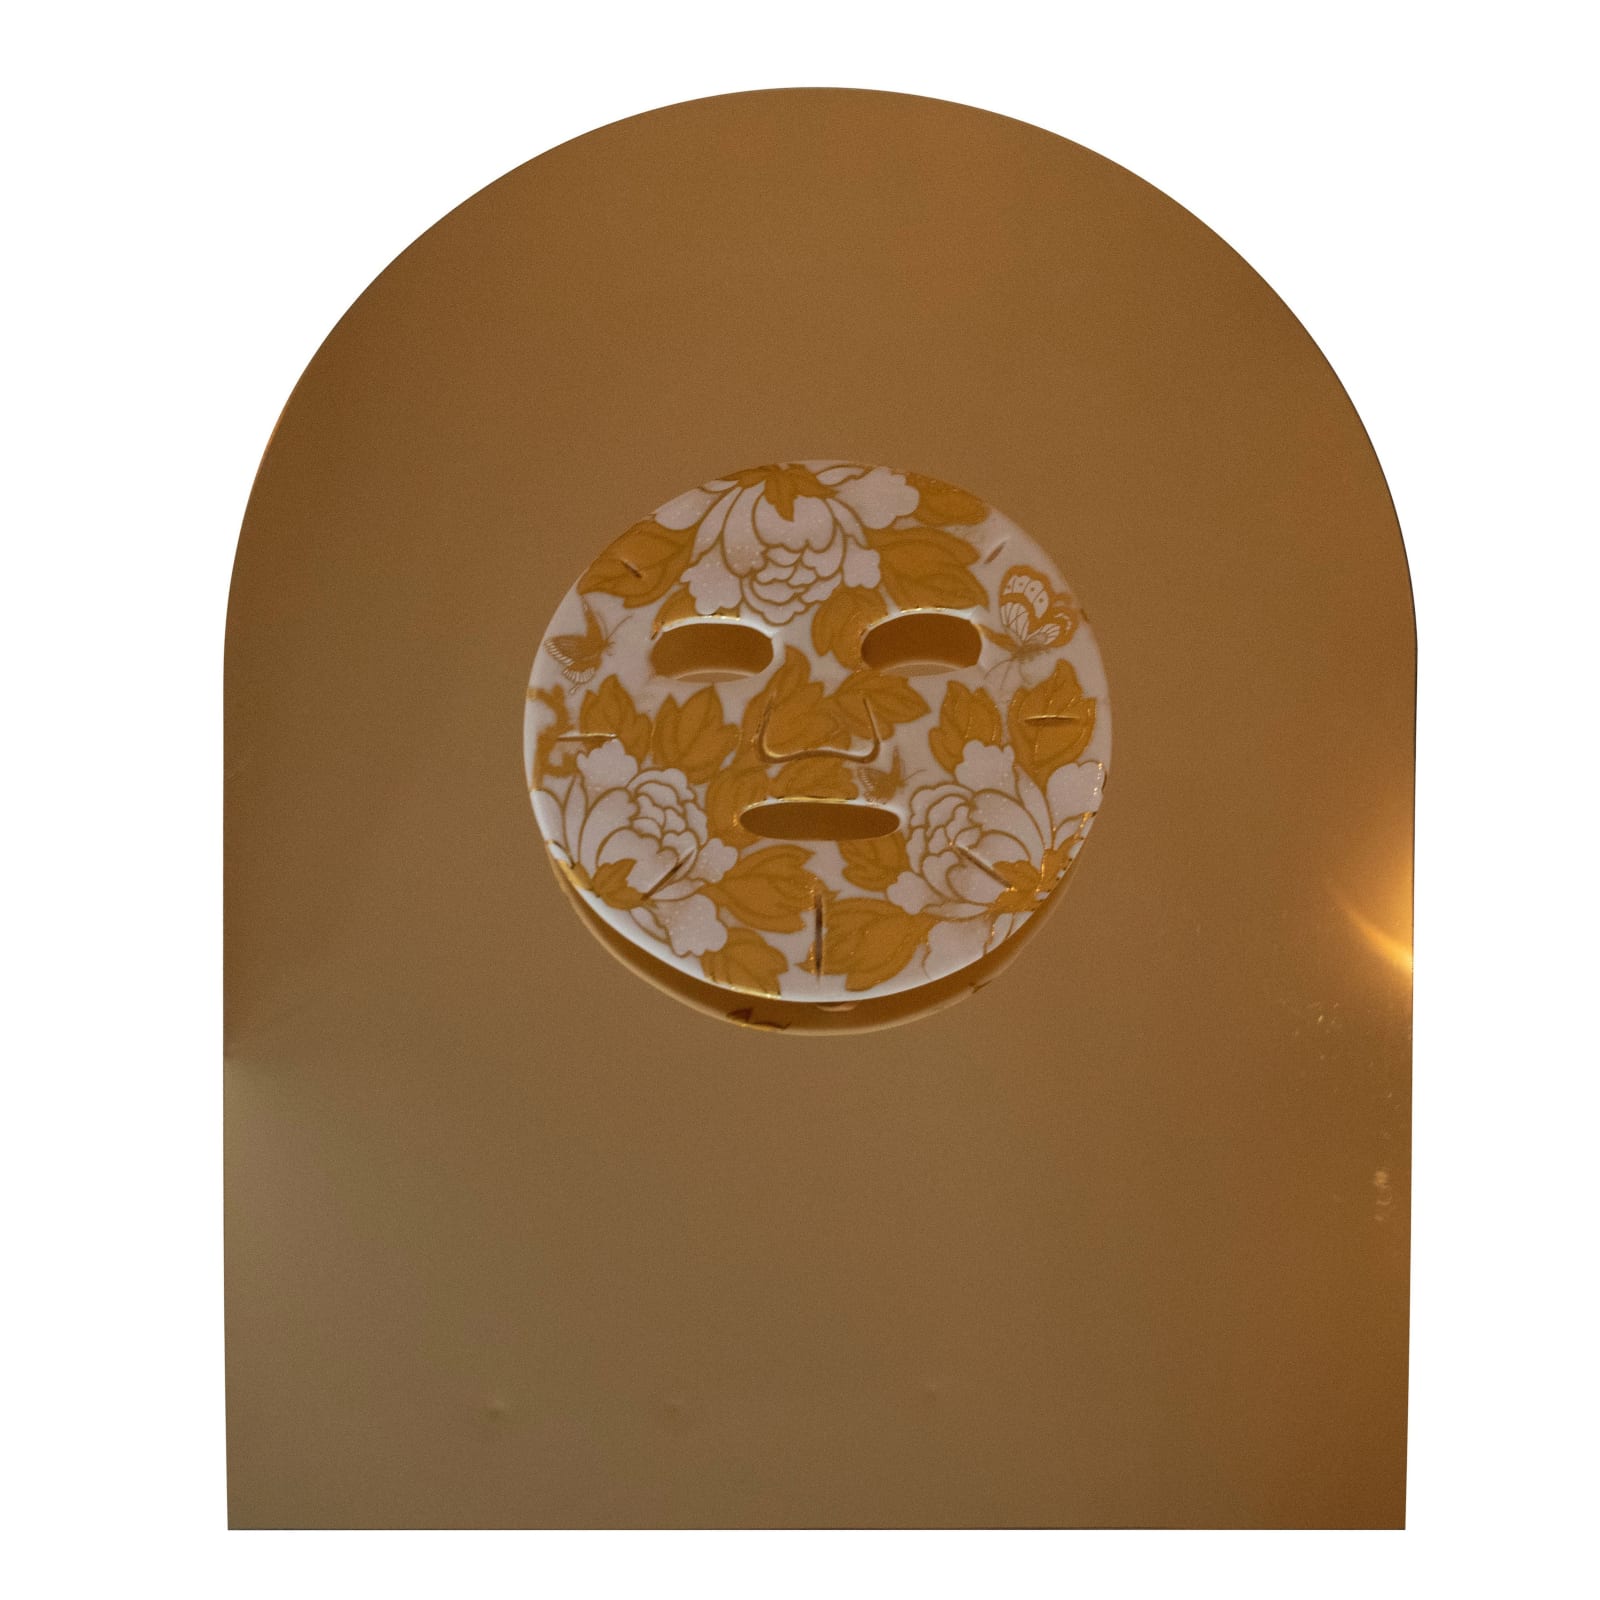 Jennifer Ling Datchuk Flawless (Big Butterflies), 2021 Porcelain, gold and white pattern transfer from Jingdezhen, China, mirror plexiglass 20 x 16 x 3 in 50.8 x 40.6 x 7.6 cm